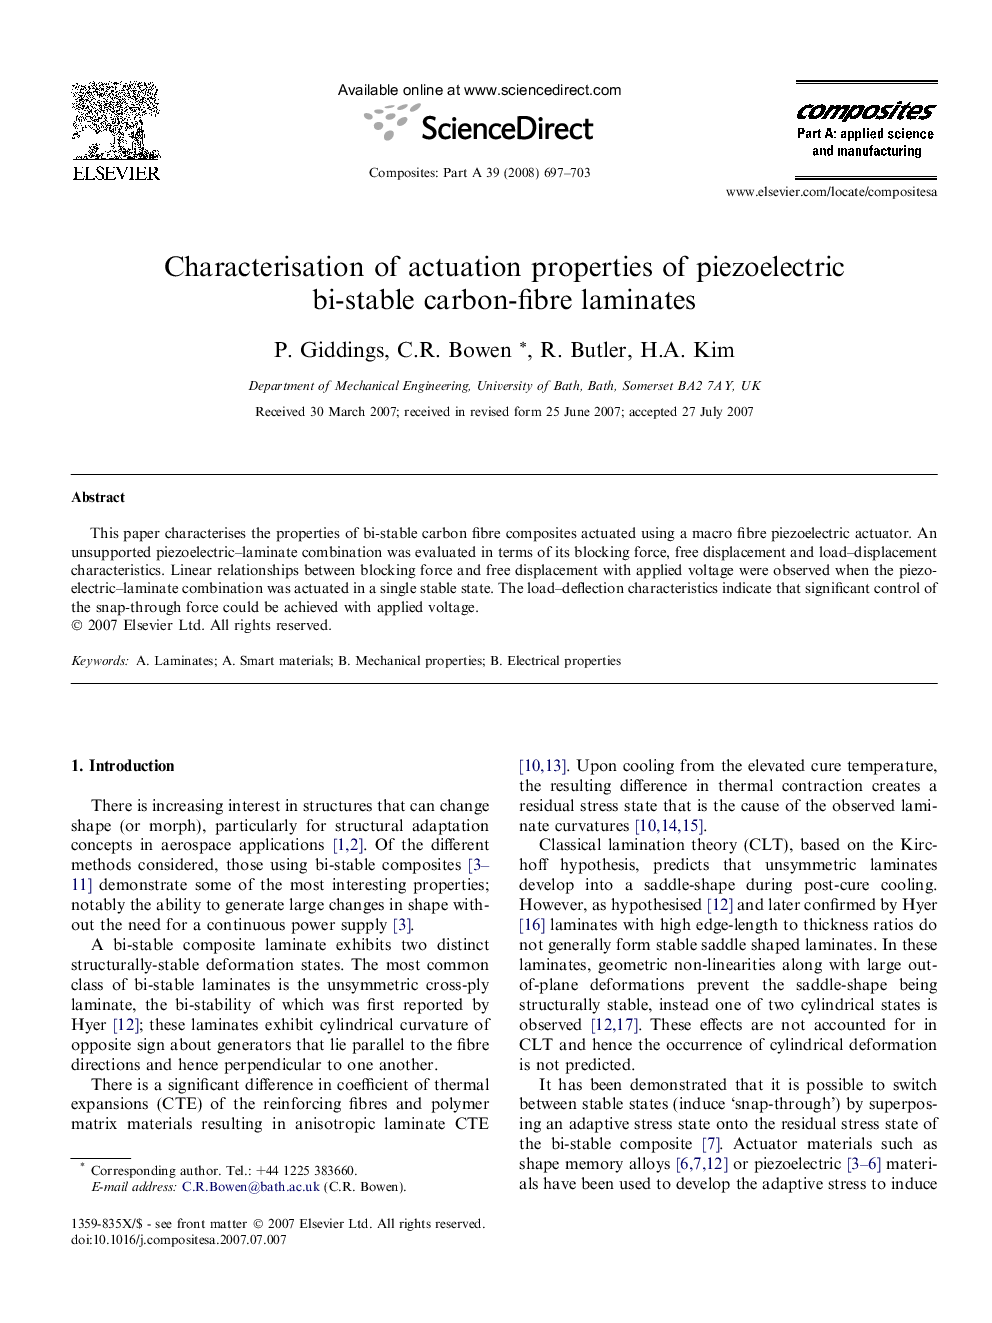 Characterisation of actuation properties of piezoelectric bi-stable carbon-fibre laminates